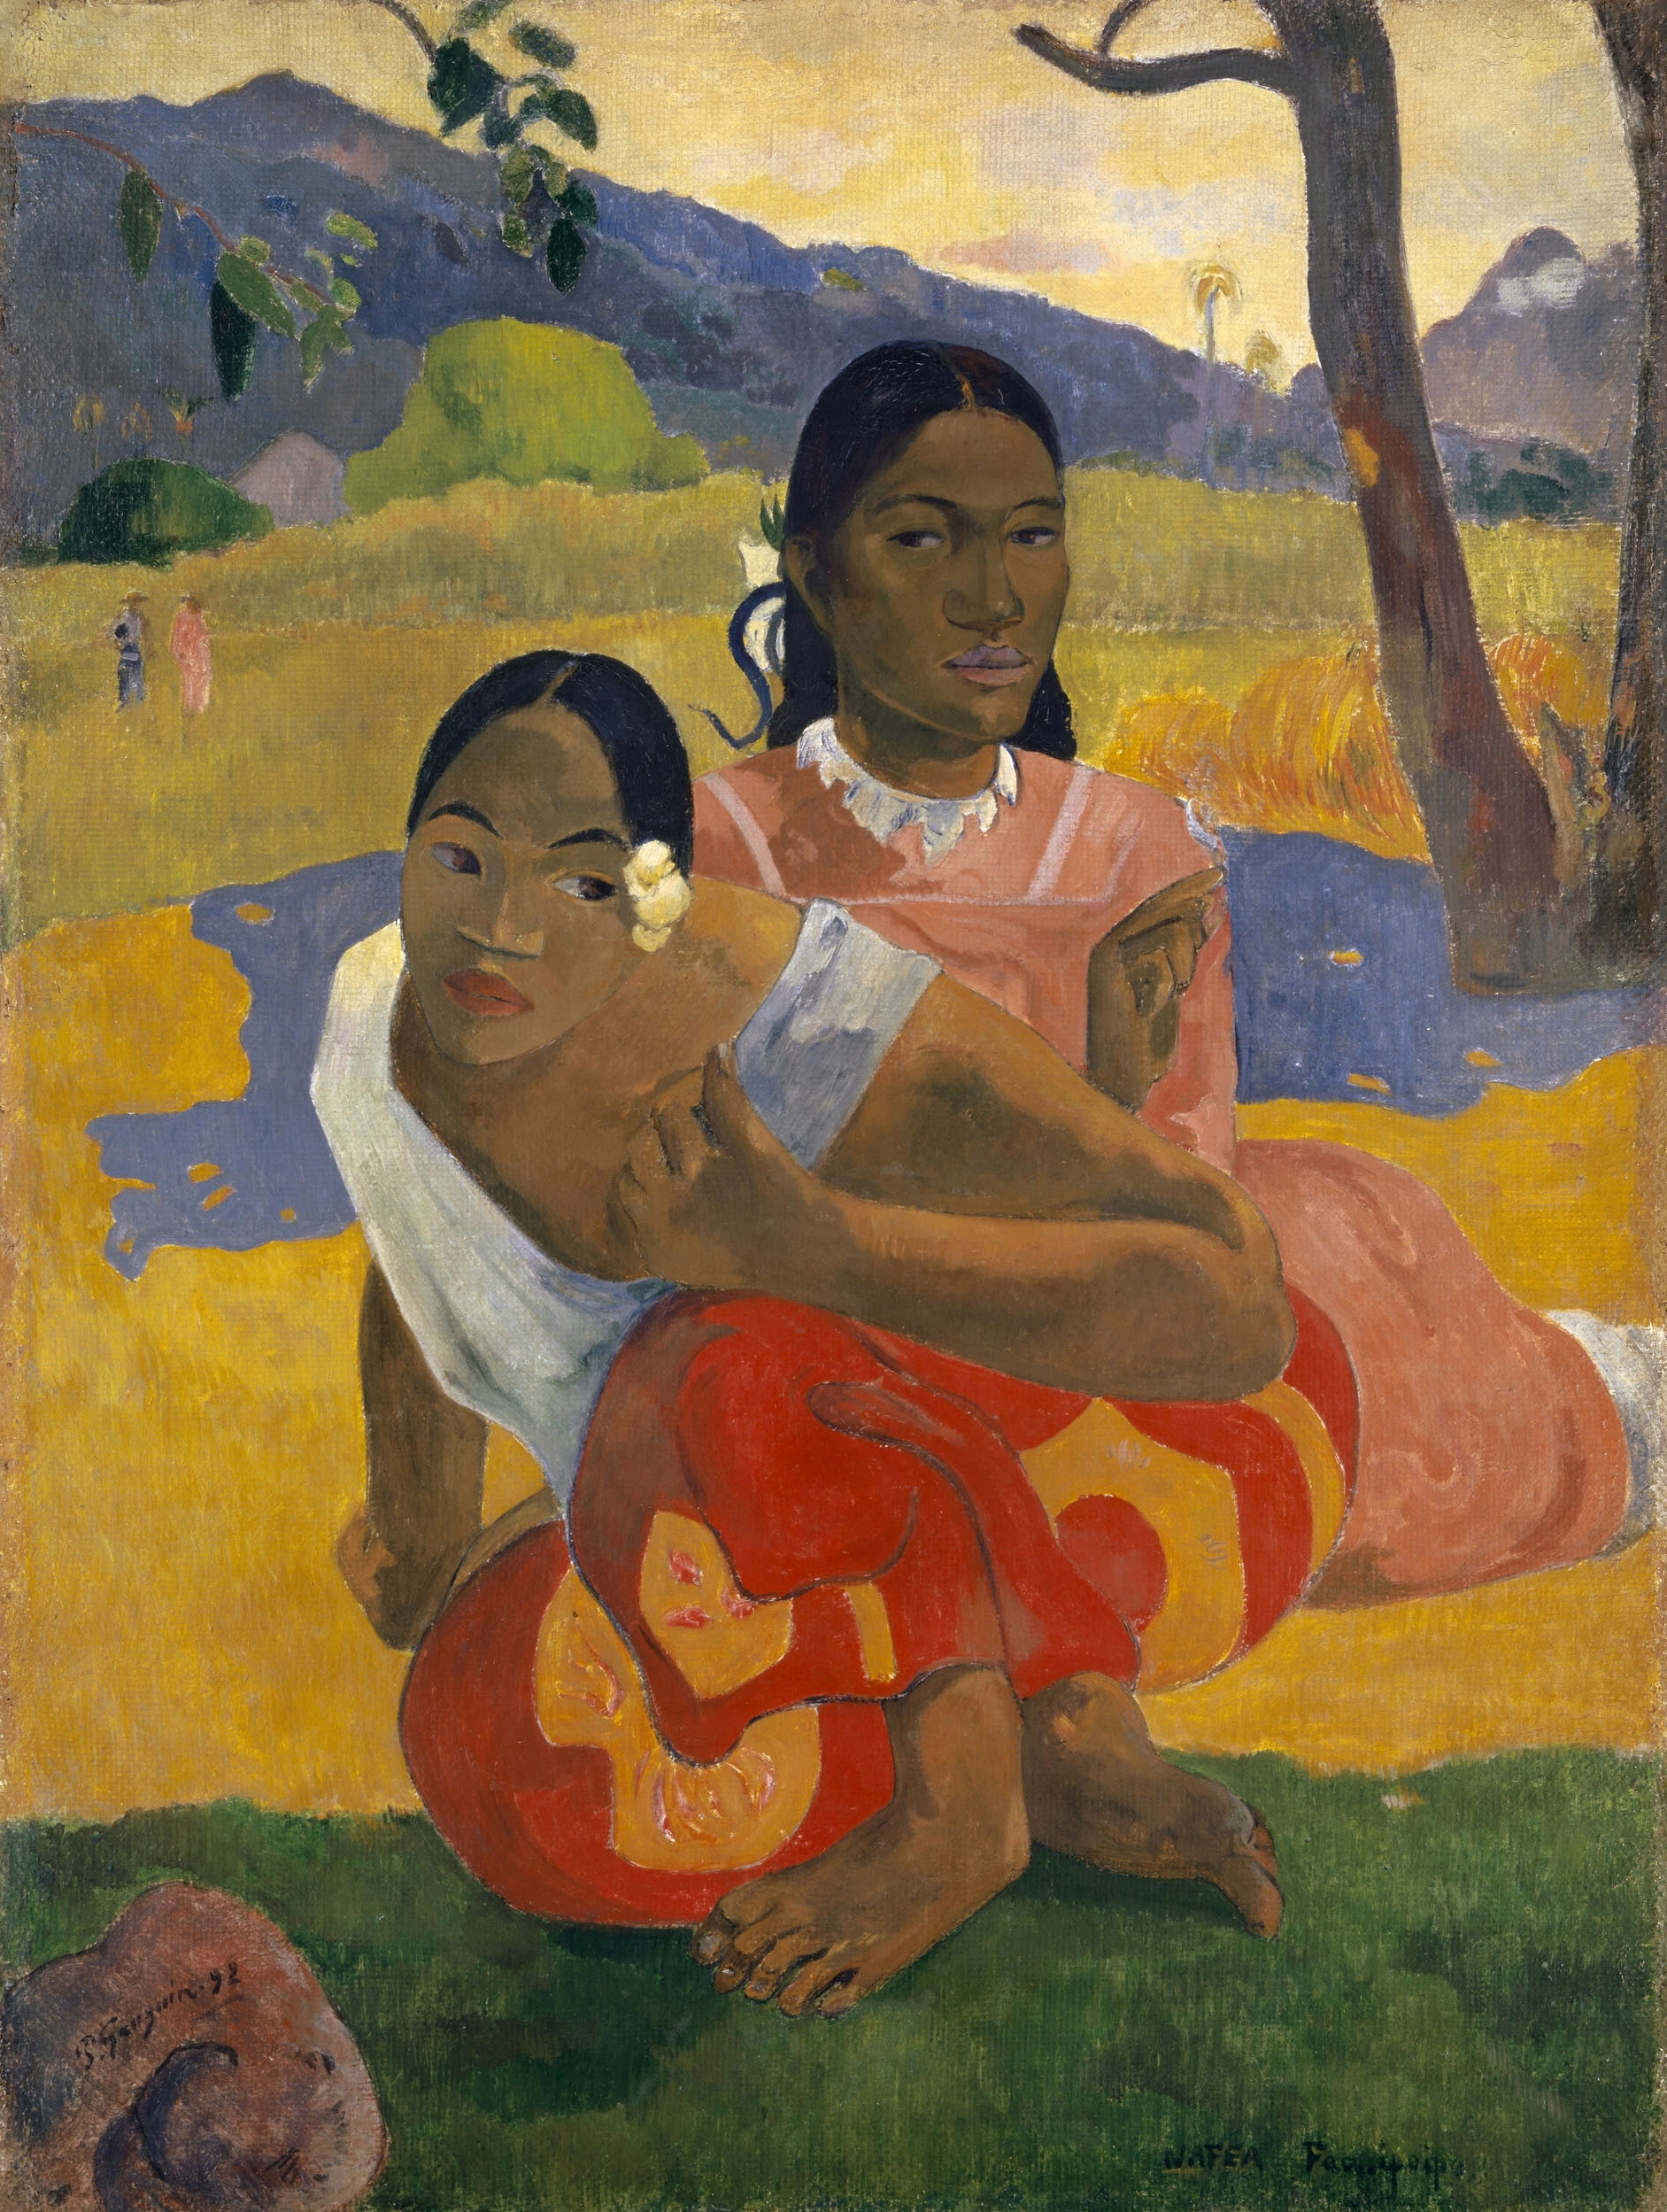 Quand te maries-tu? Artiste: Paul Gaugain by Paul Gauguin - 1892 - 101 x 77 cm collection privée